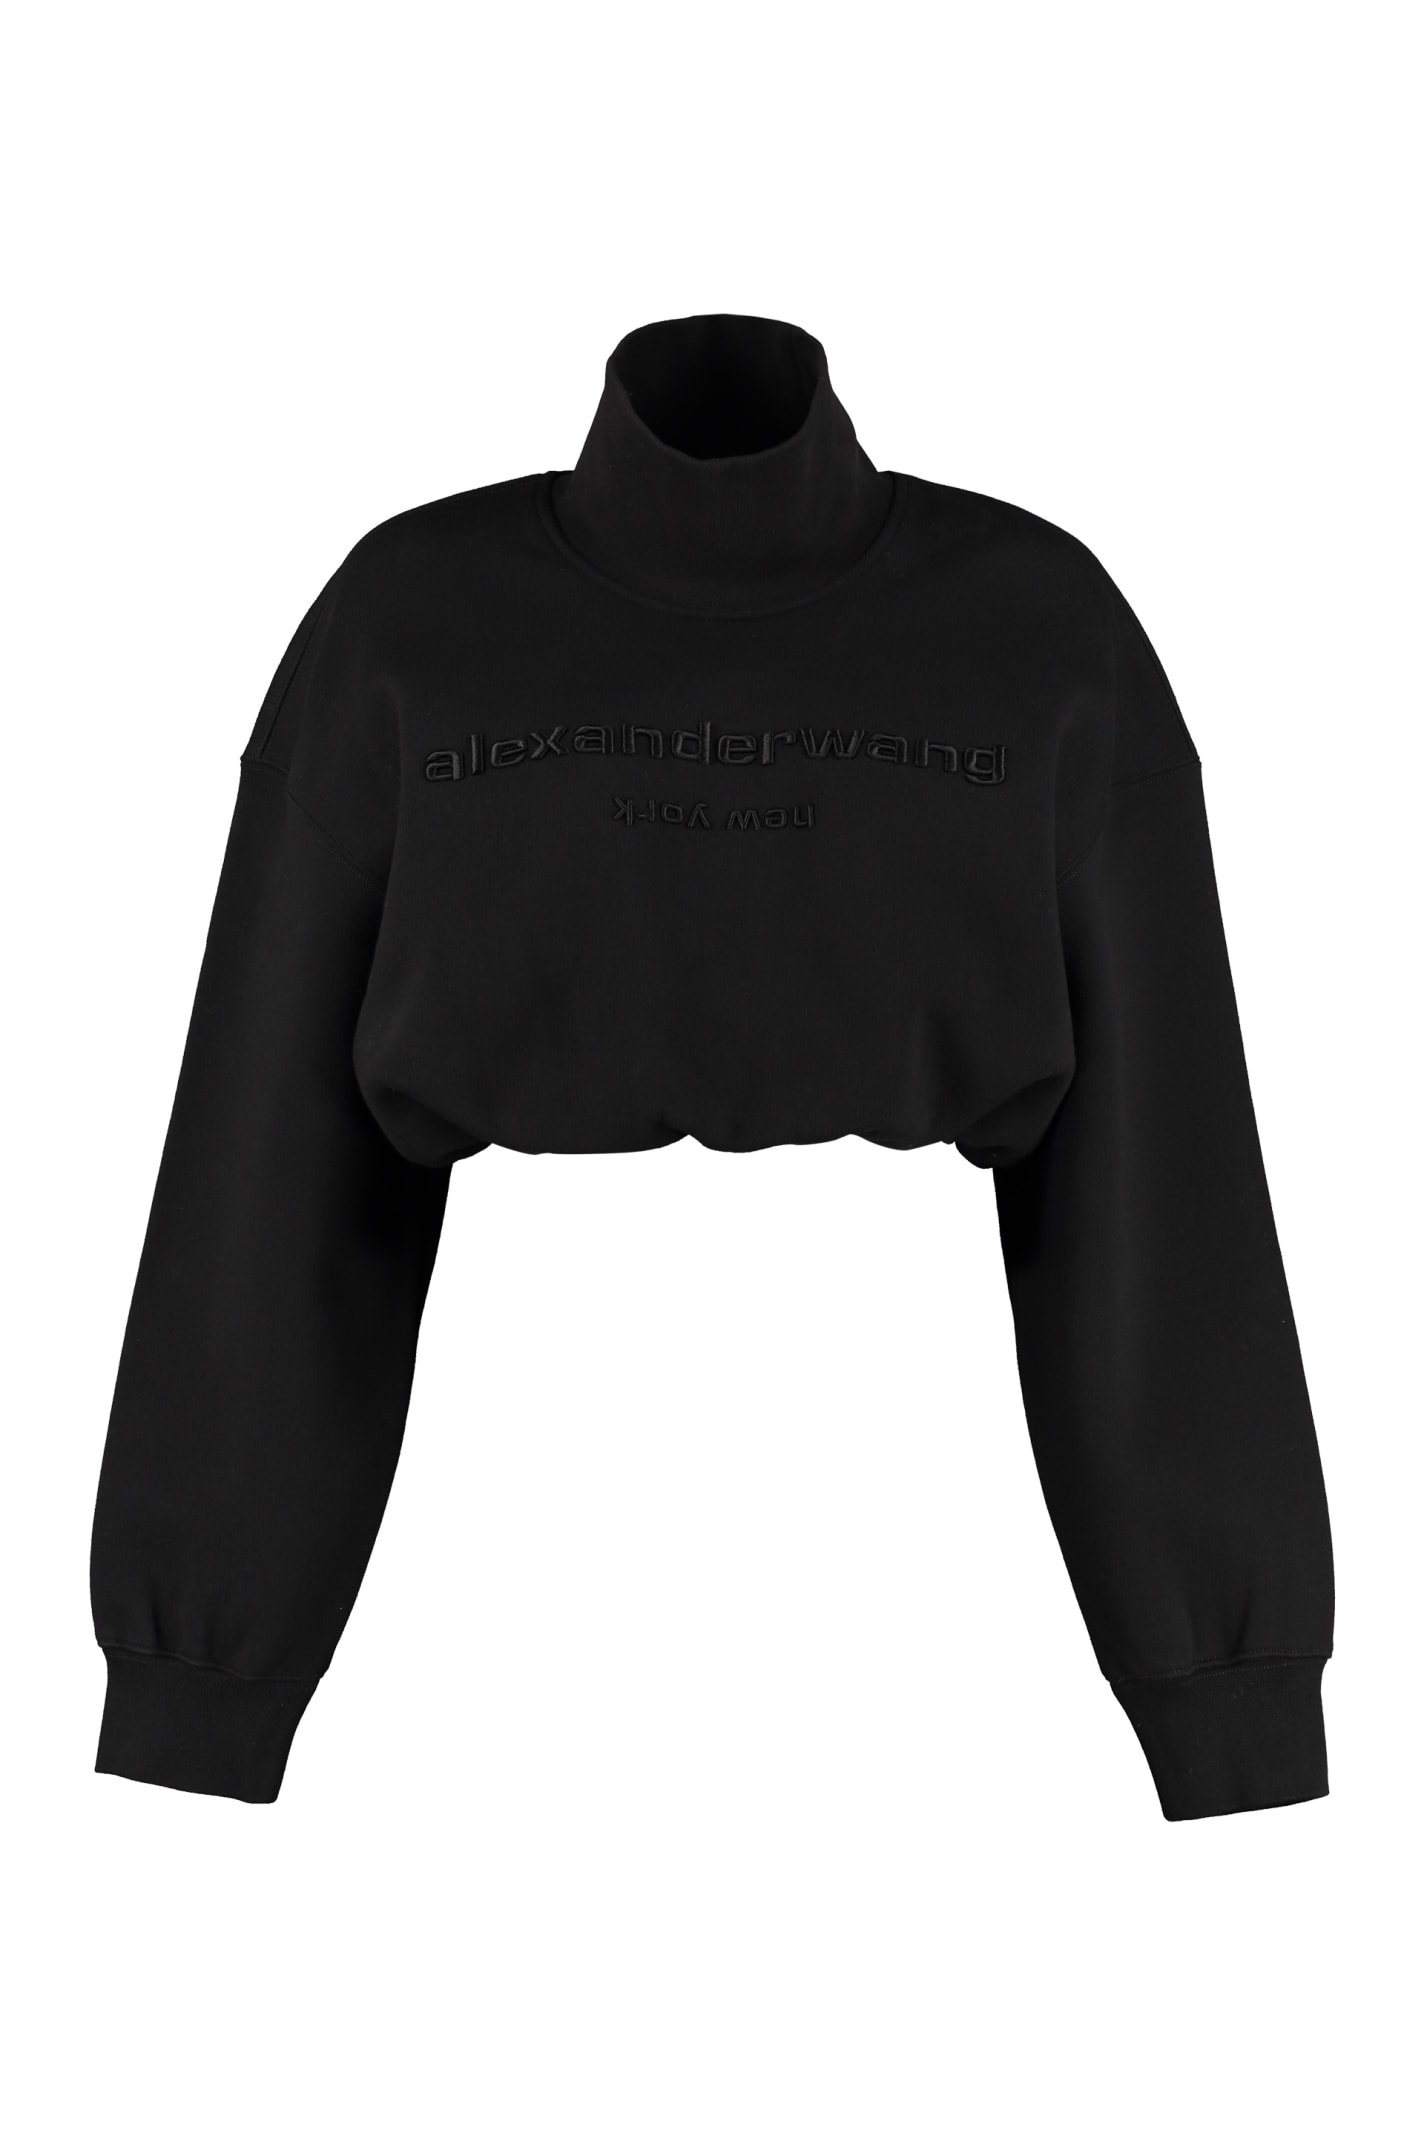 Alexander Wang Cropped Sweatshirt With Logo In Black